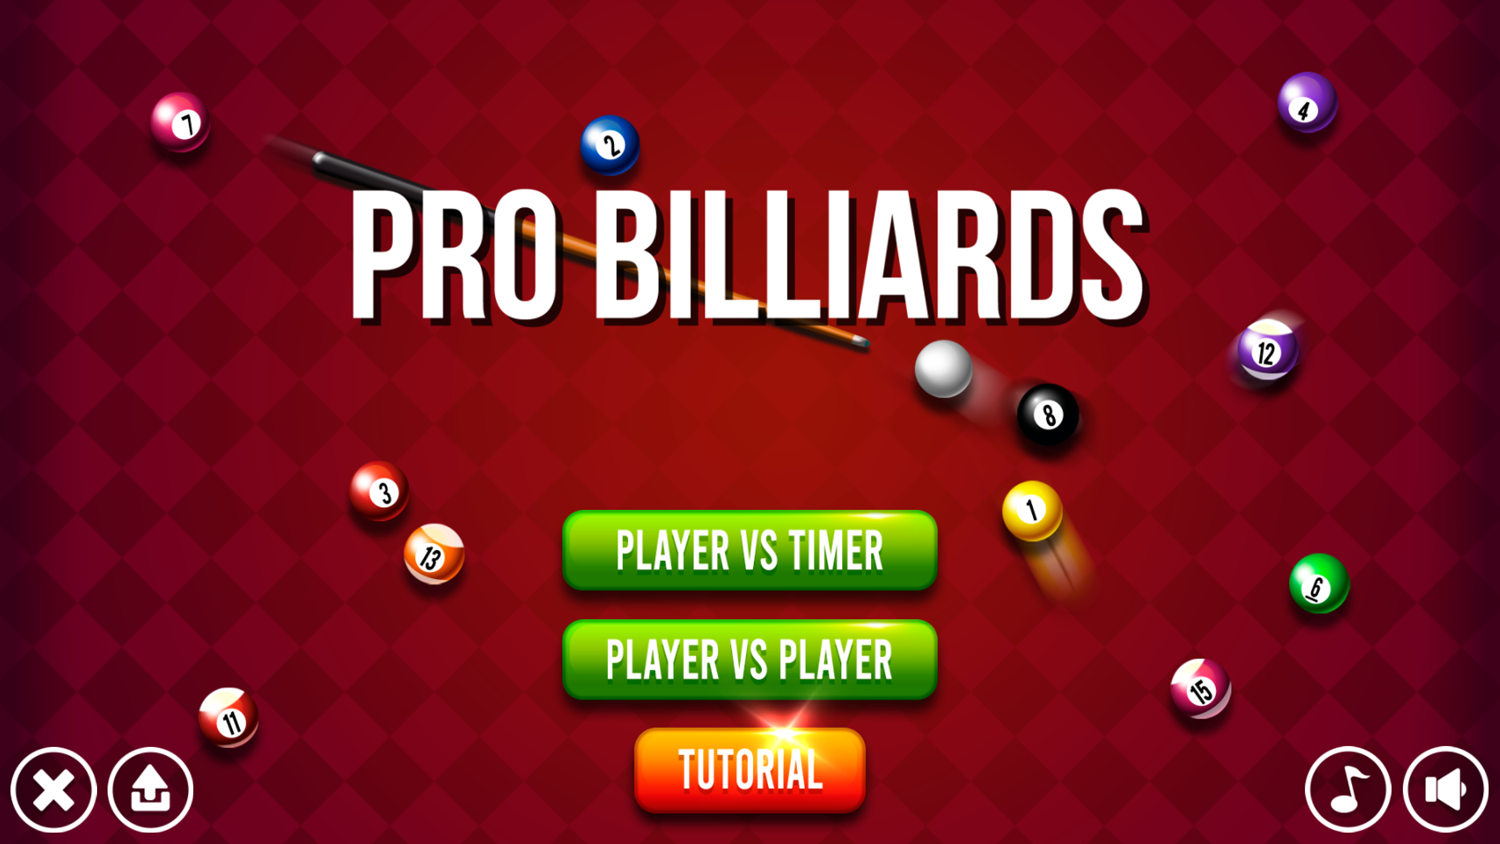 Pro Billiards Game Welcome Screen Screenshot.